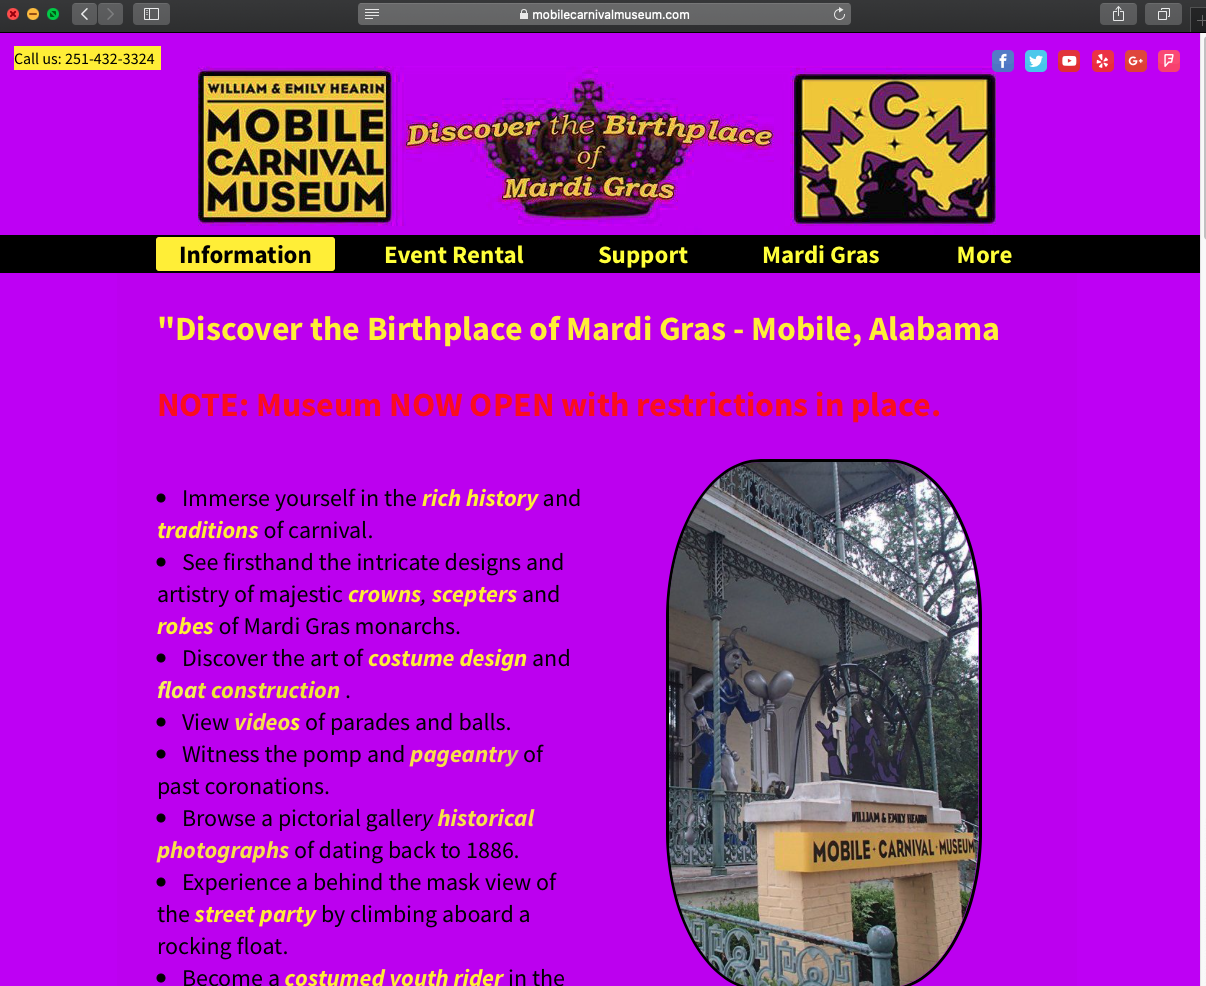 Mobile Carnival Museum